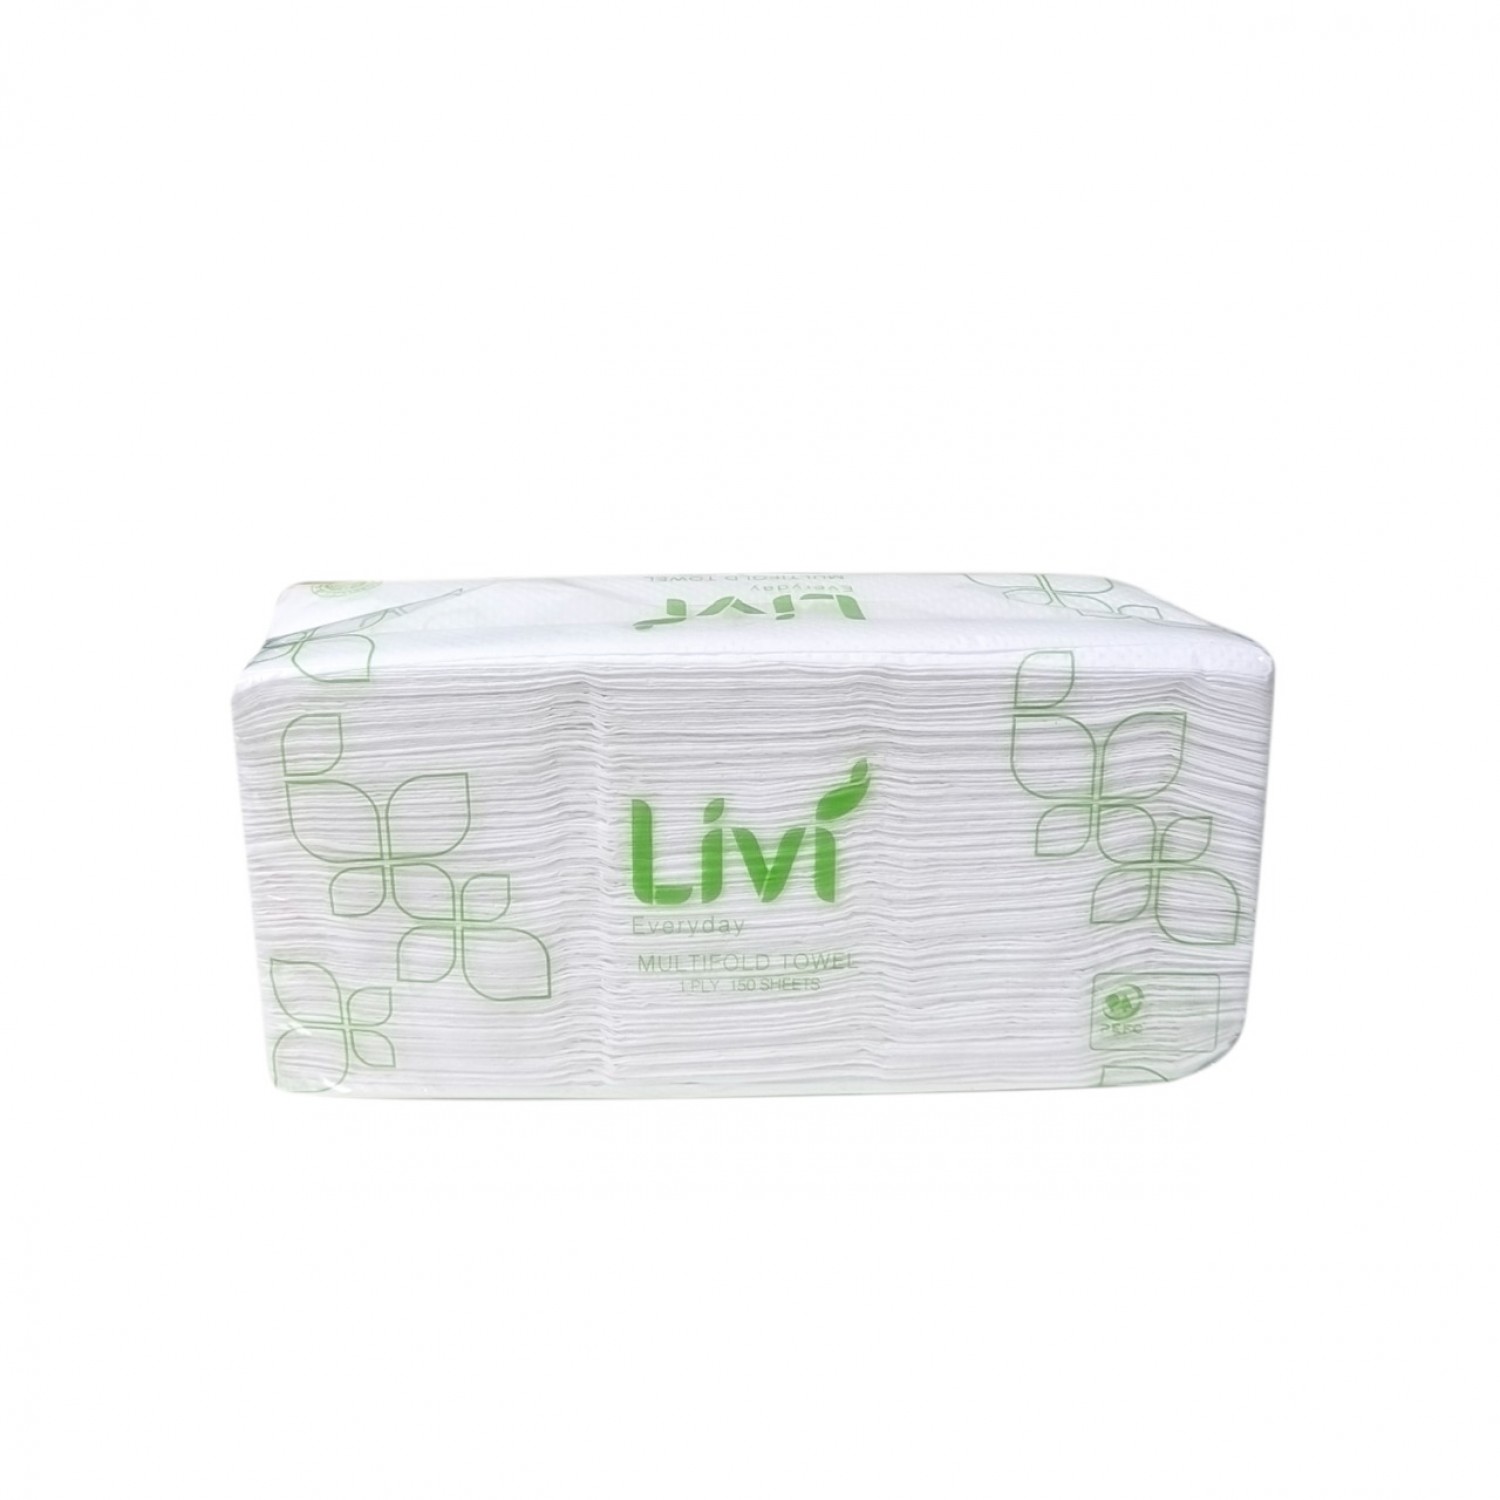 Tissue Hand Towel Livi Everyday 9492 - tissueku - tissueku